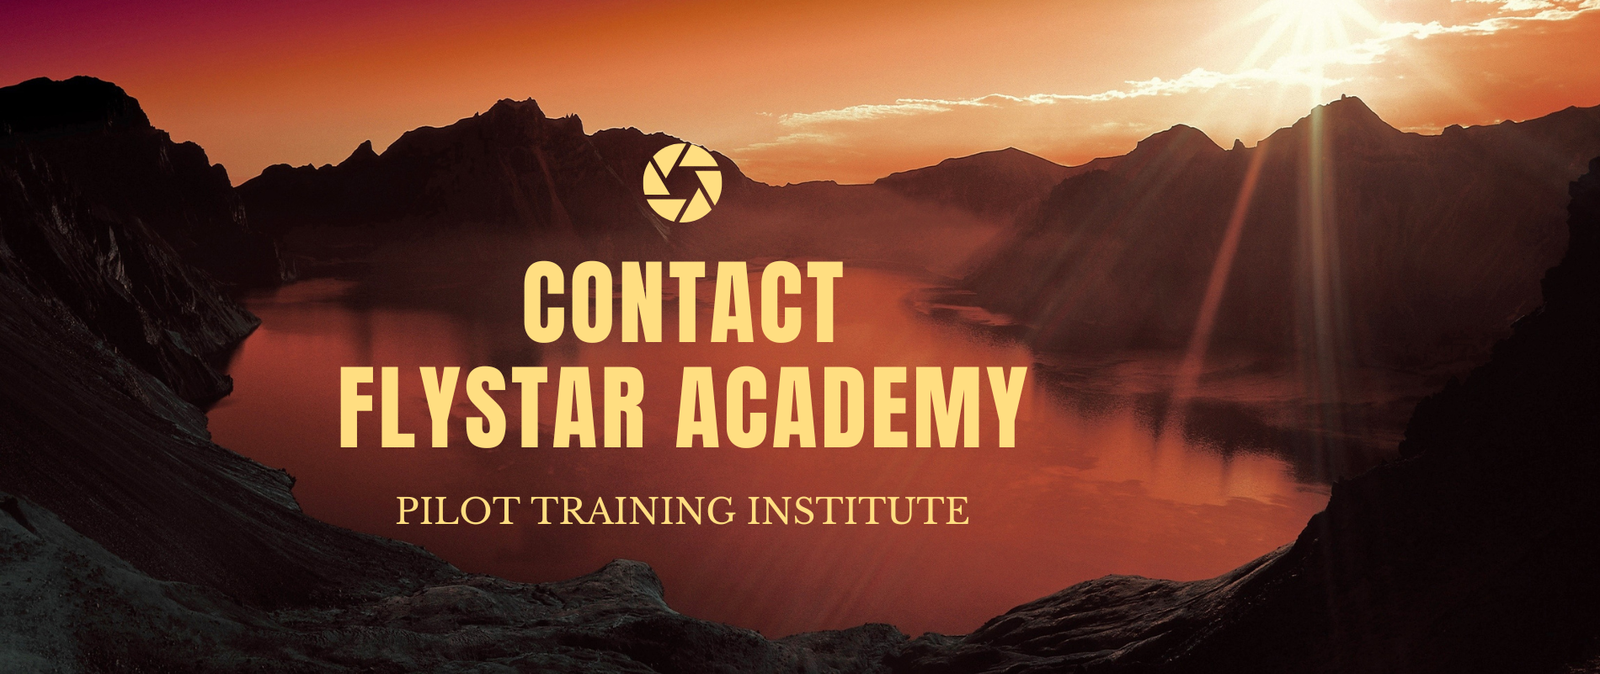 flystar academy contact